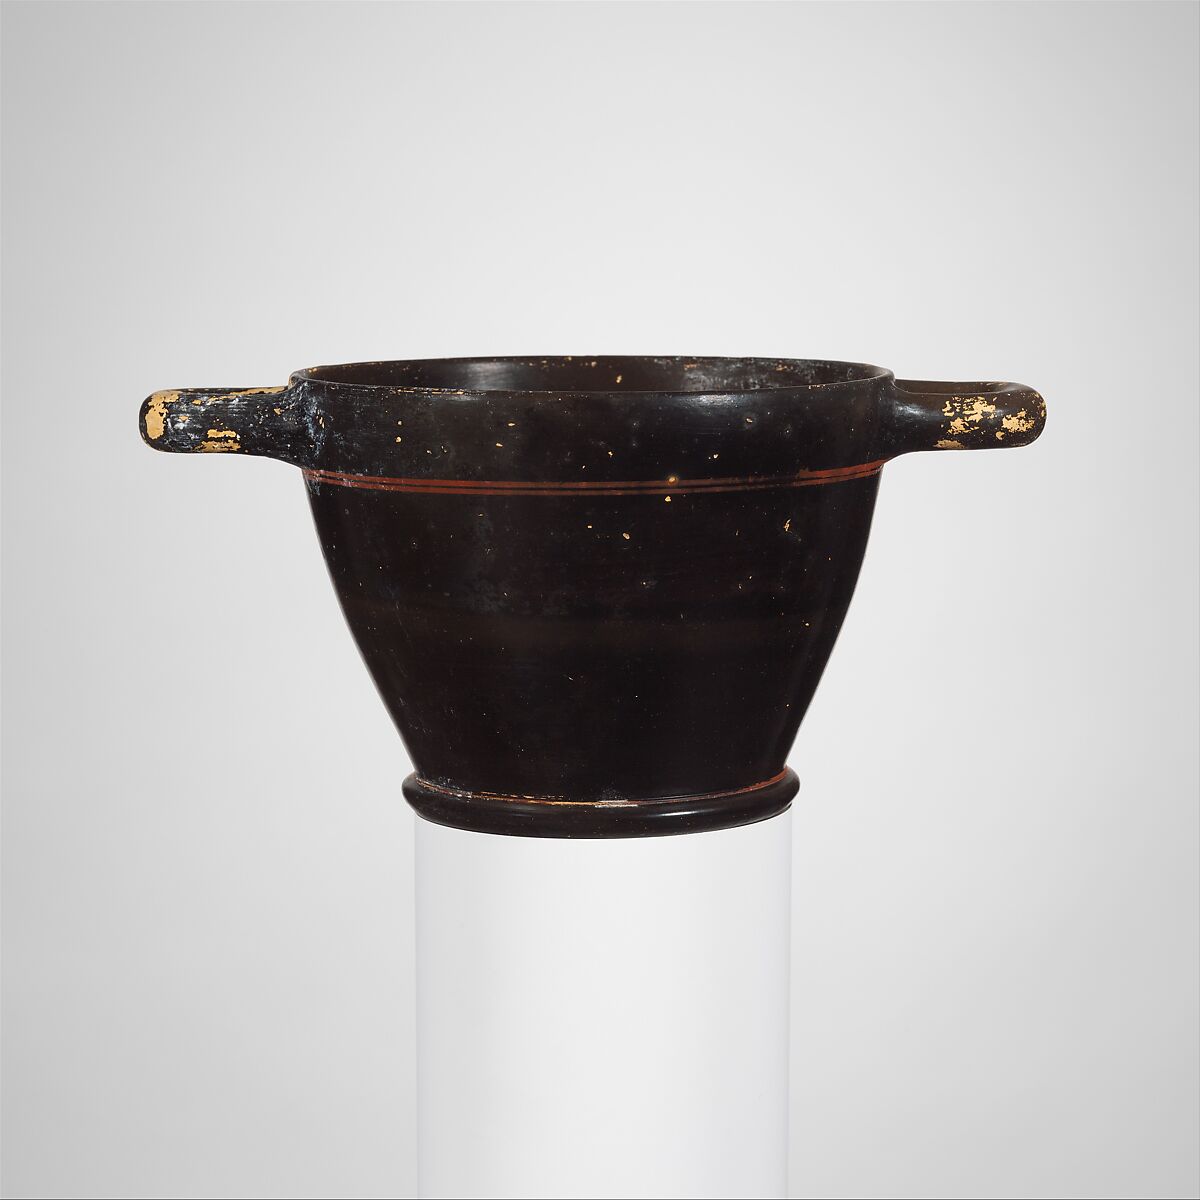 Terracotta skyphos (deep drinking cup), Terracotta, Greek, Corinthian 